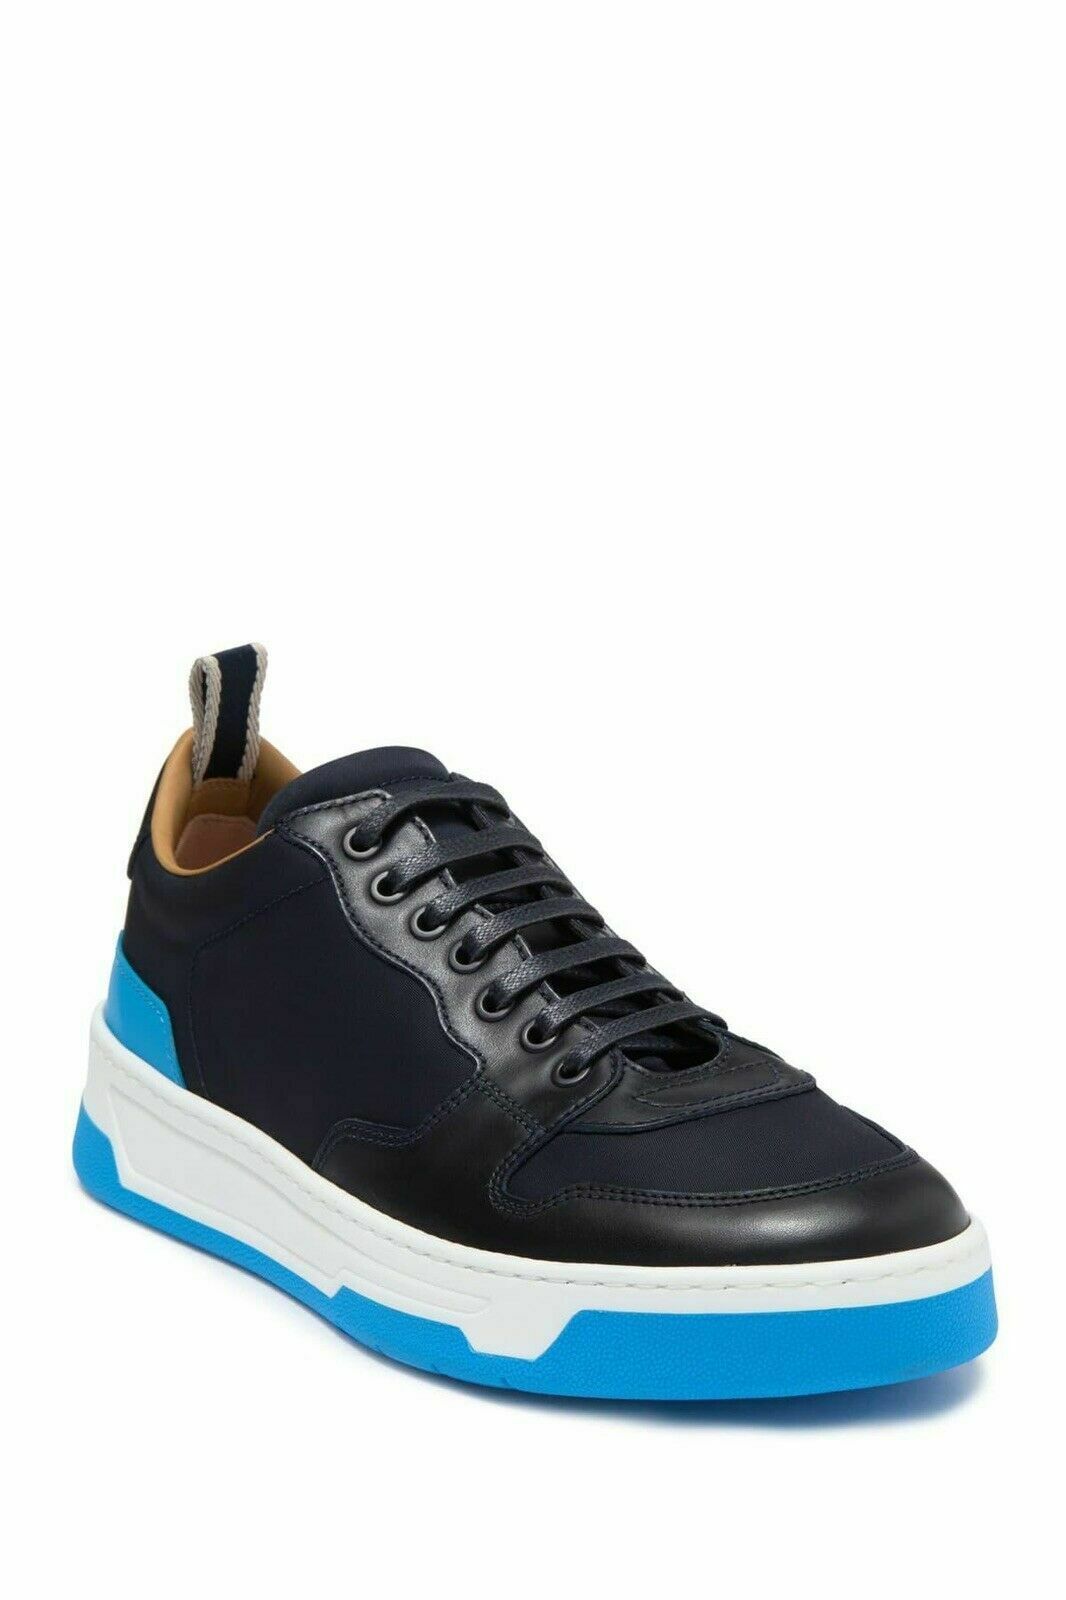 Hugo BOSS Mens Navy Blue Baltimore Tenn_itny Casual Sneakers Sz US 10 7530-6 - $297.00